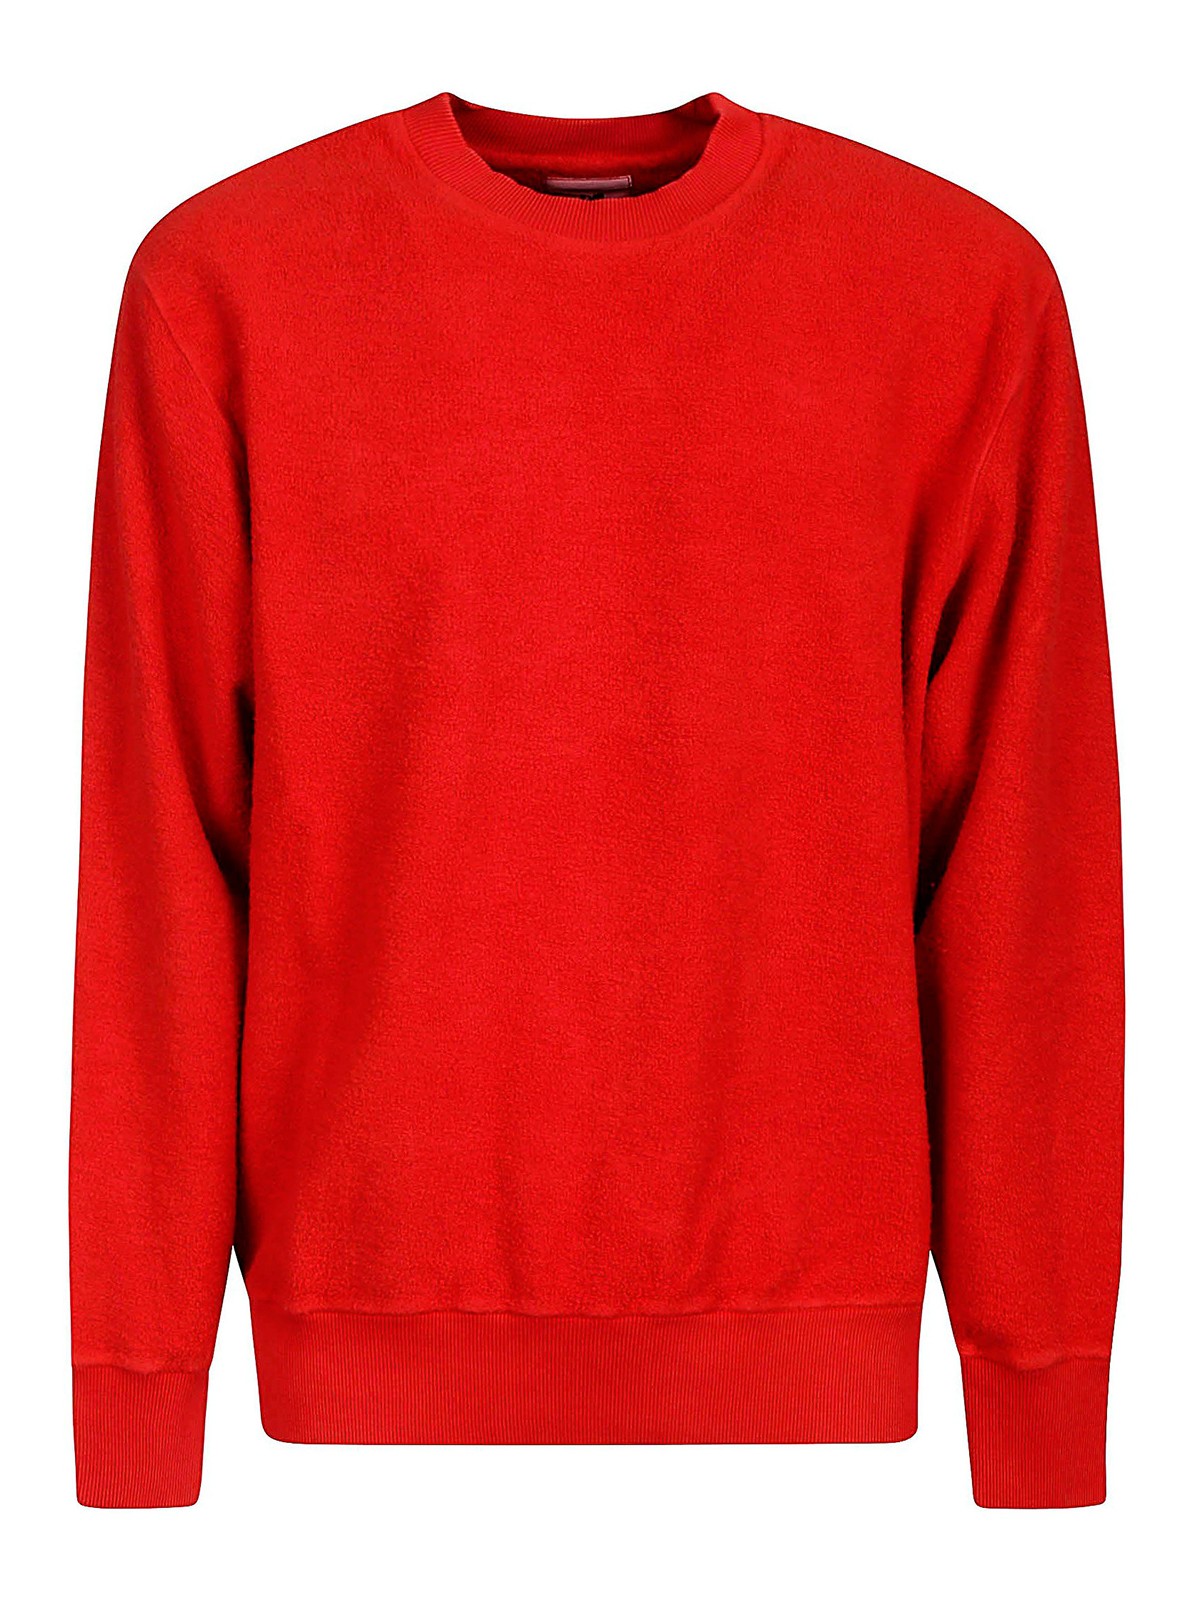 Pt Torino Cotton Sweatshirt In Red